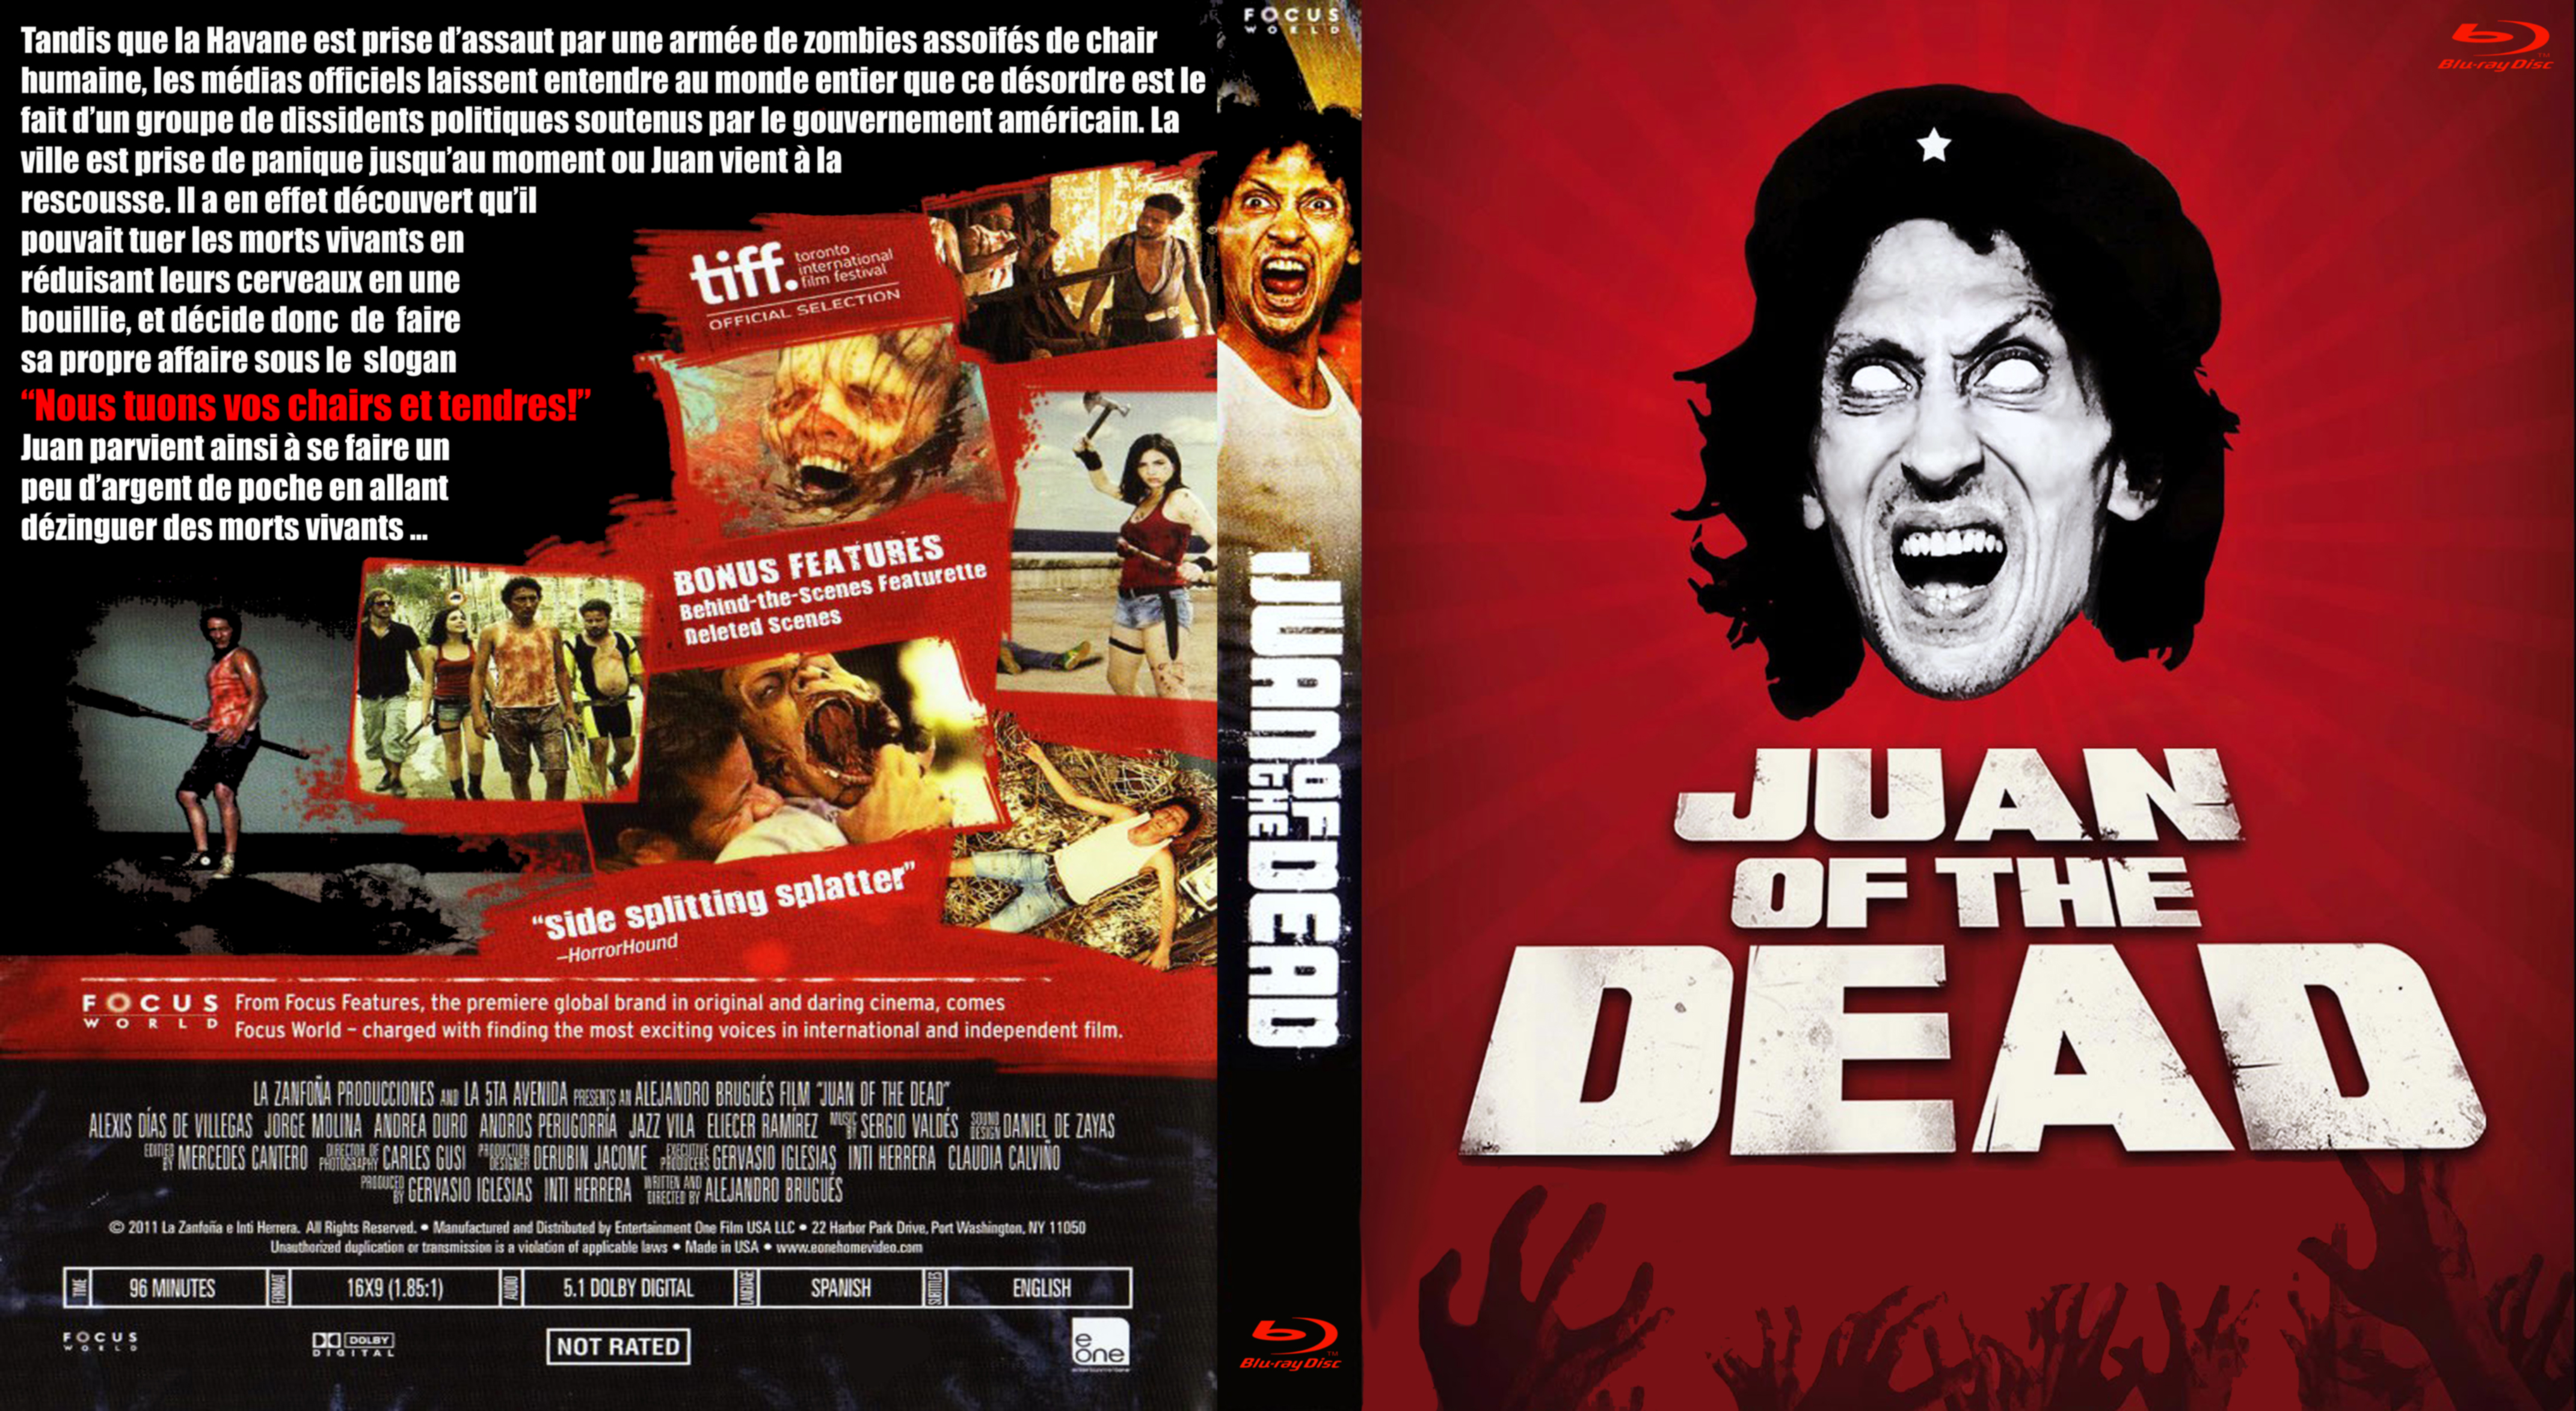 Jaquette DVD Juan of the dead custom (BLU-RAY)